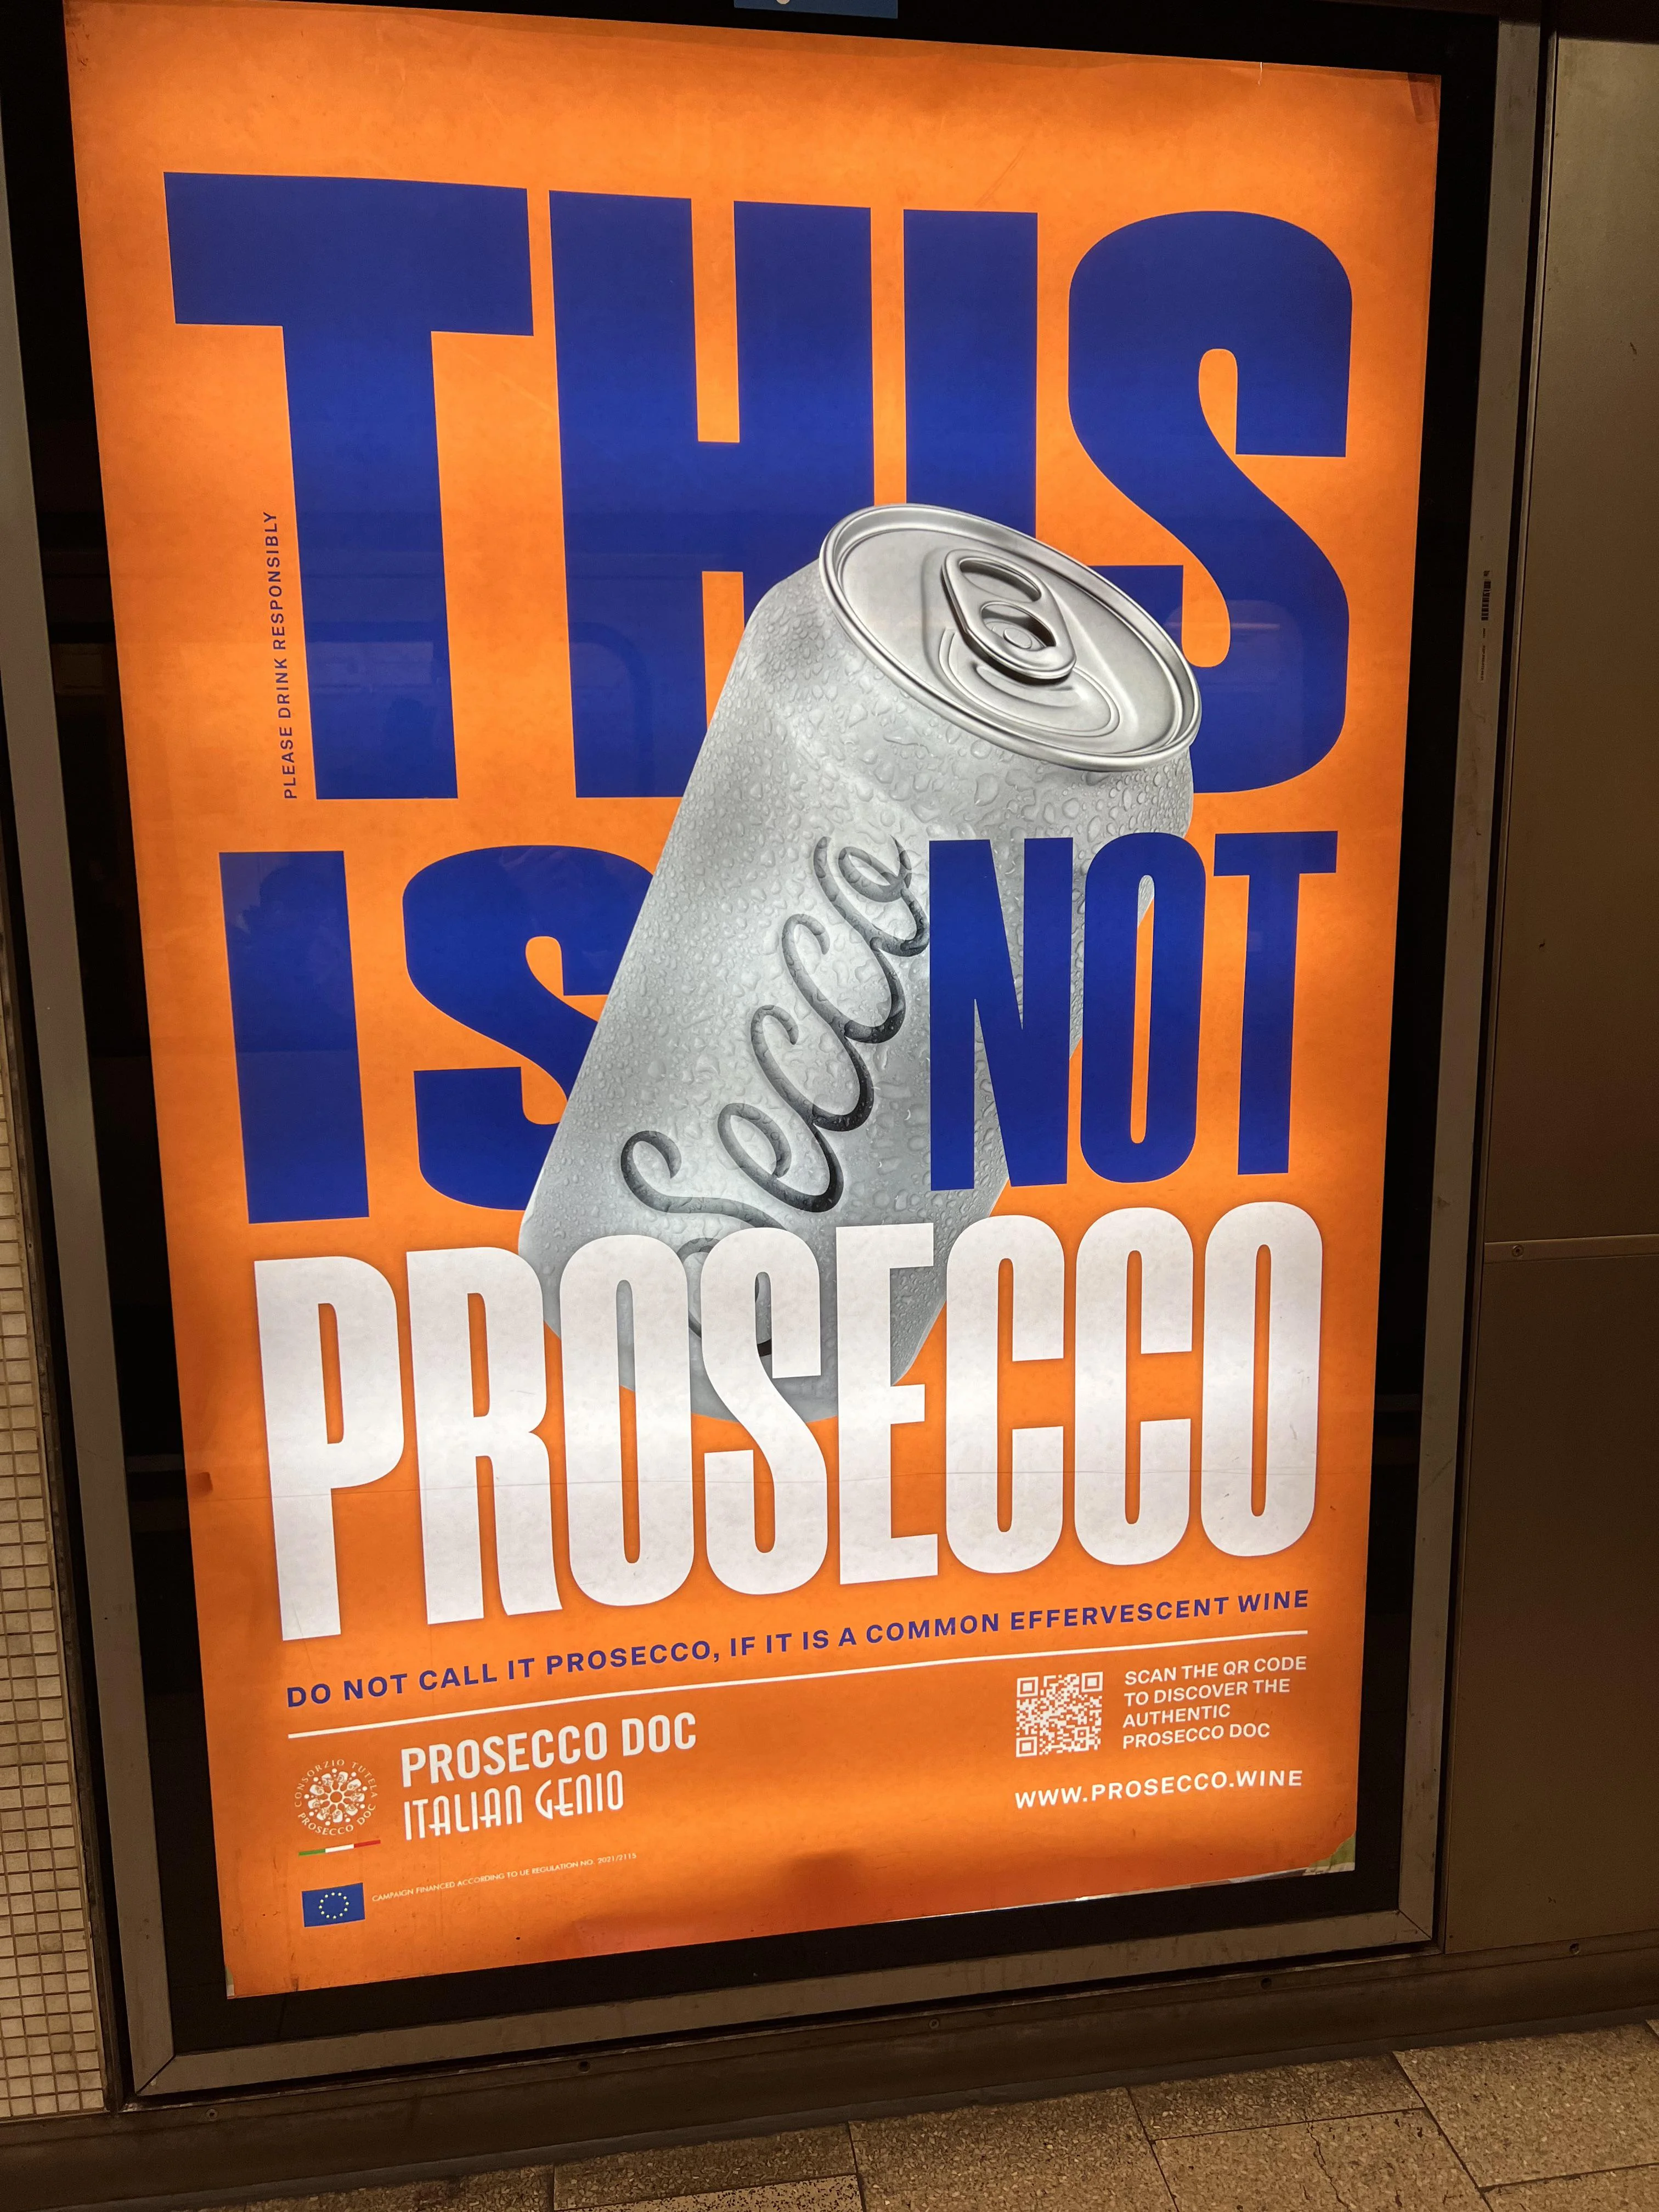 Cartaz Prosecco no metrô